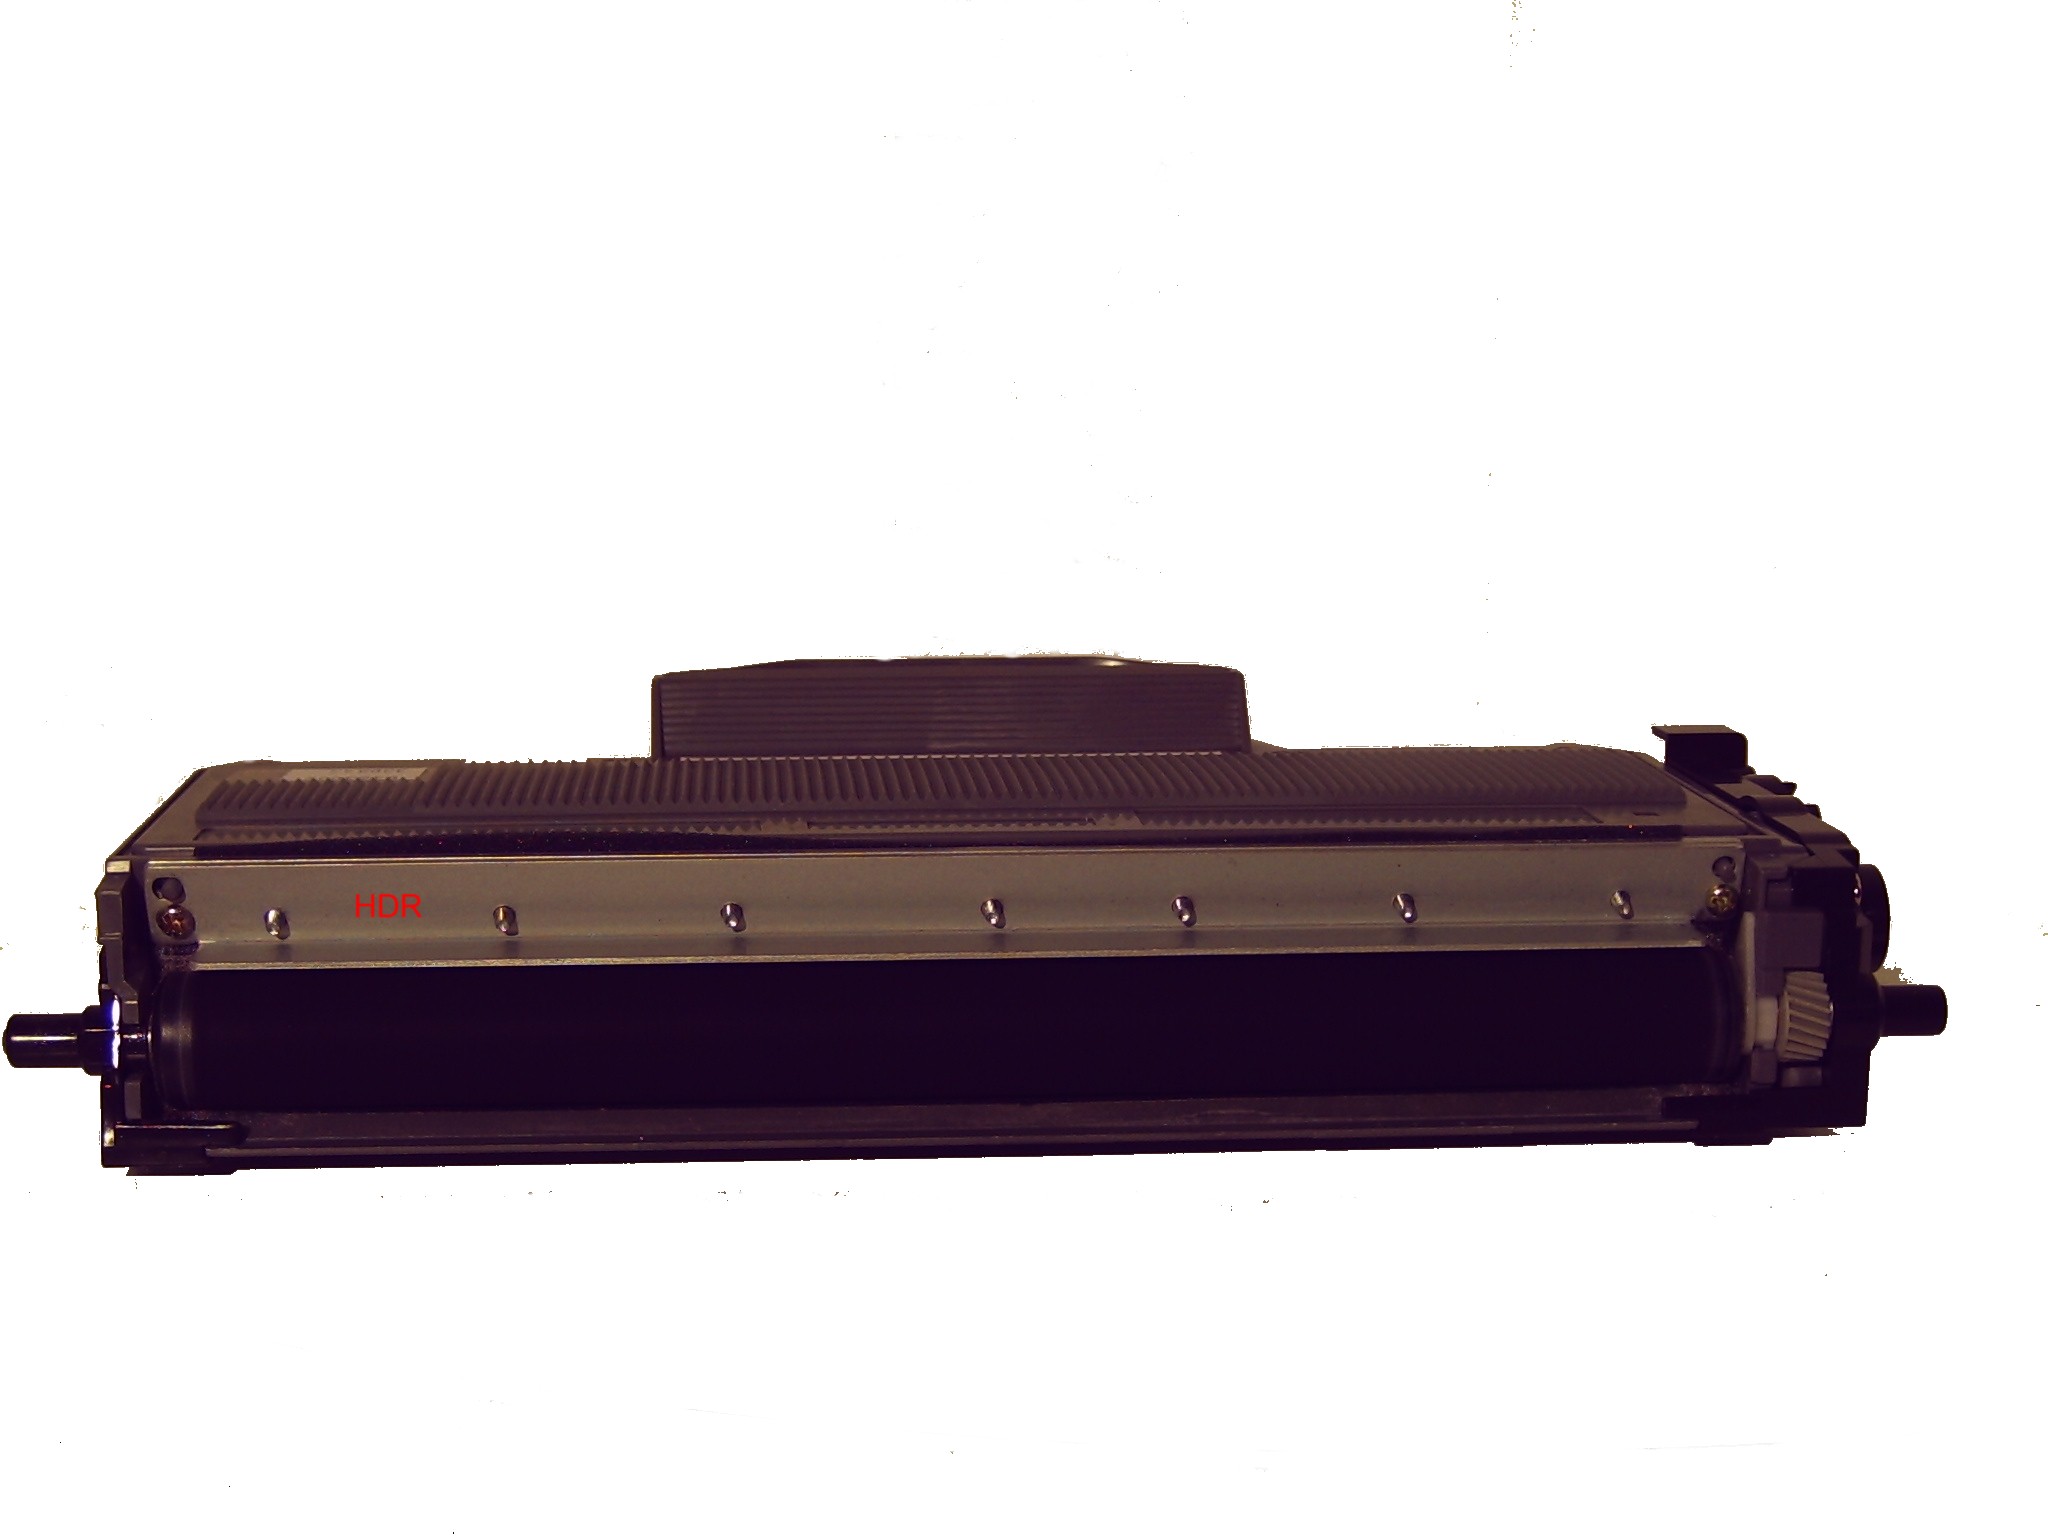 Europcart Toner XXL kompatibel für Brother HL-2140 MFC-7840 DCP-7045 